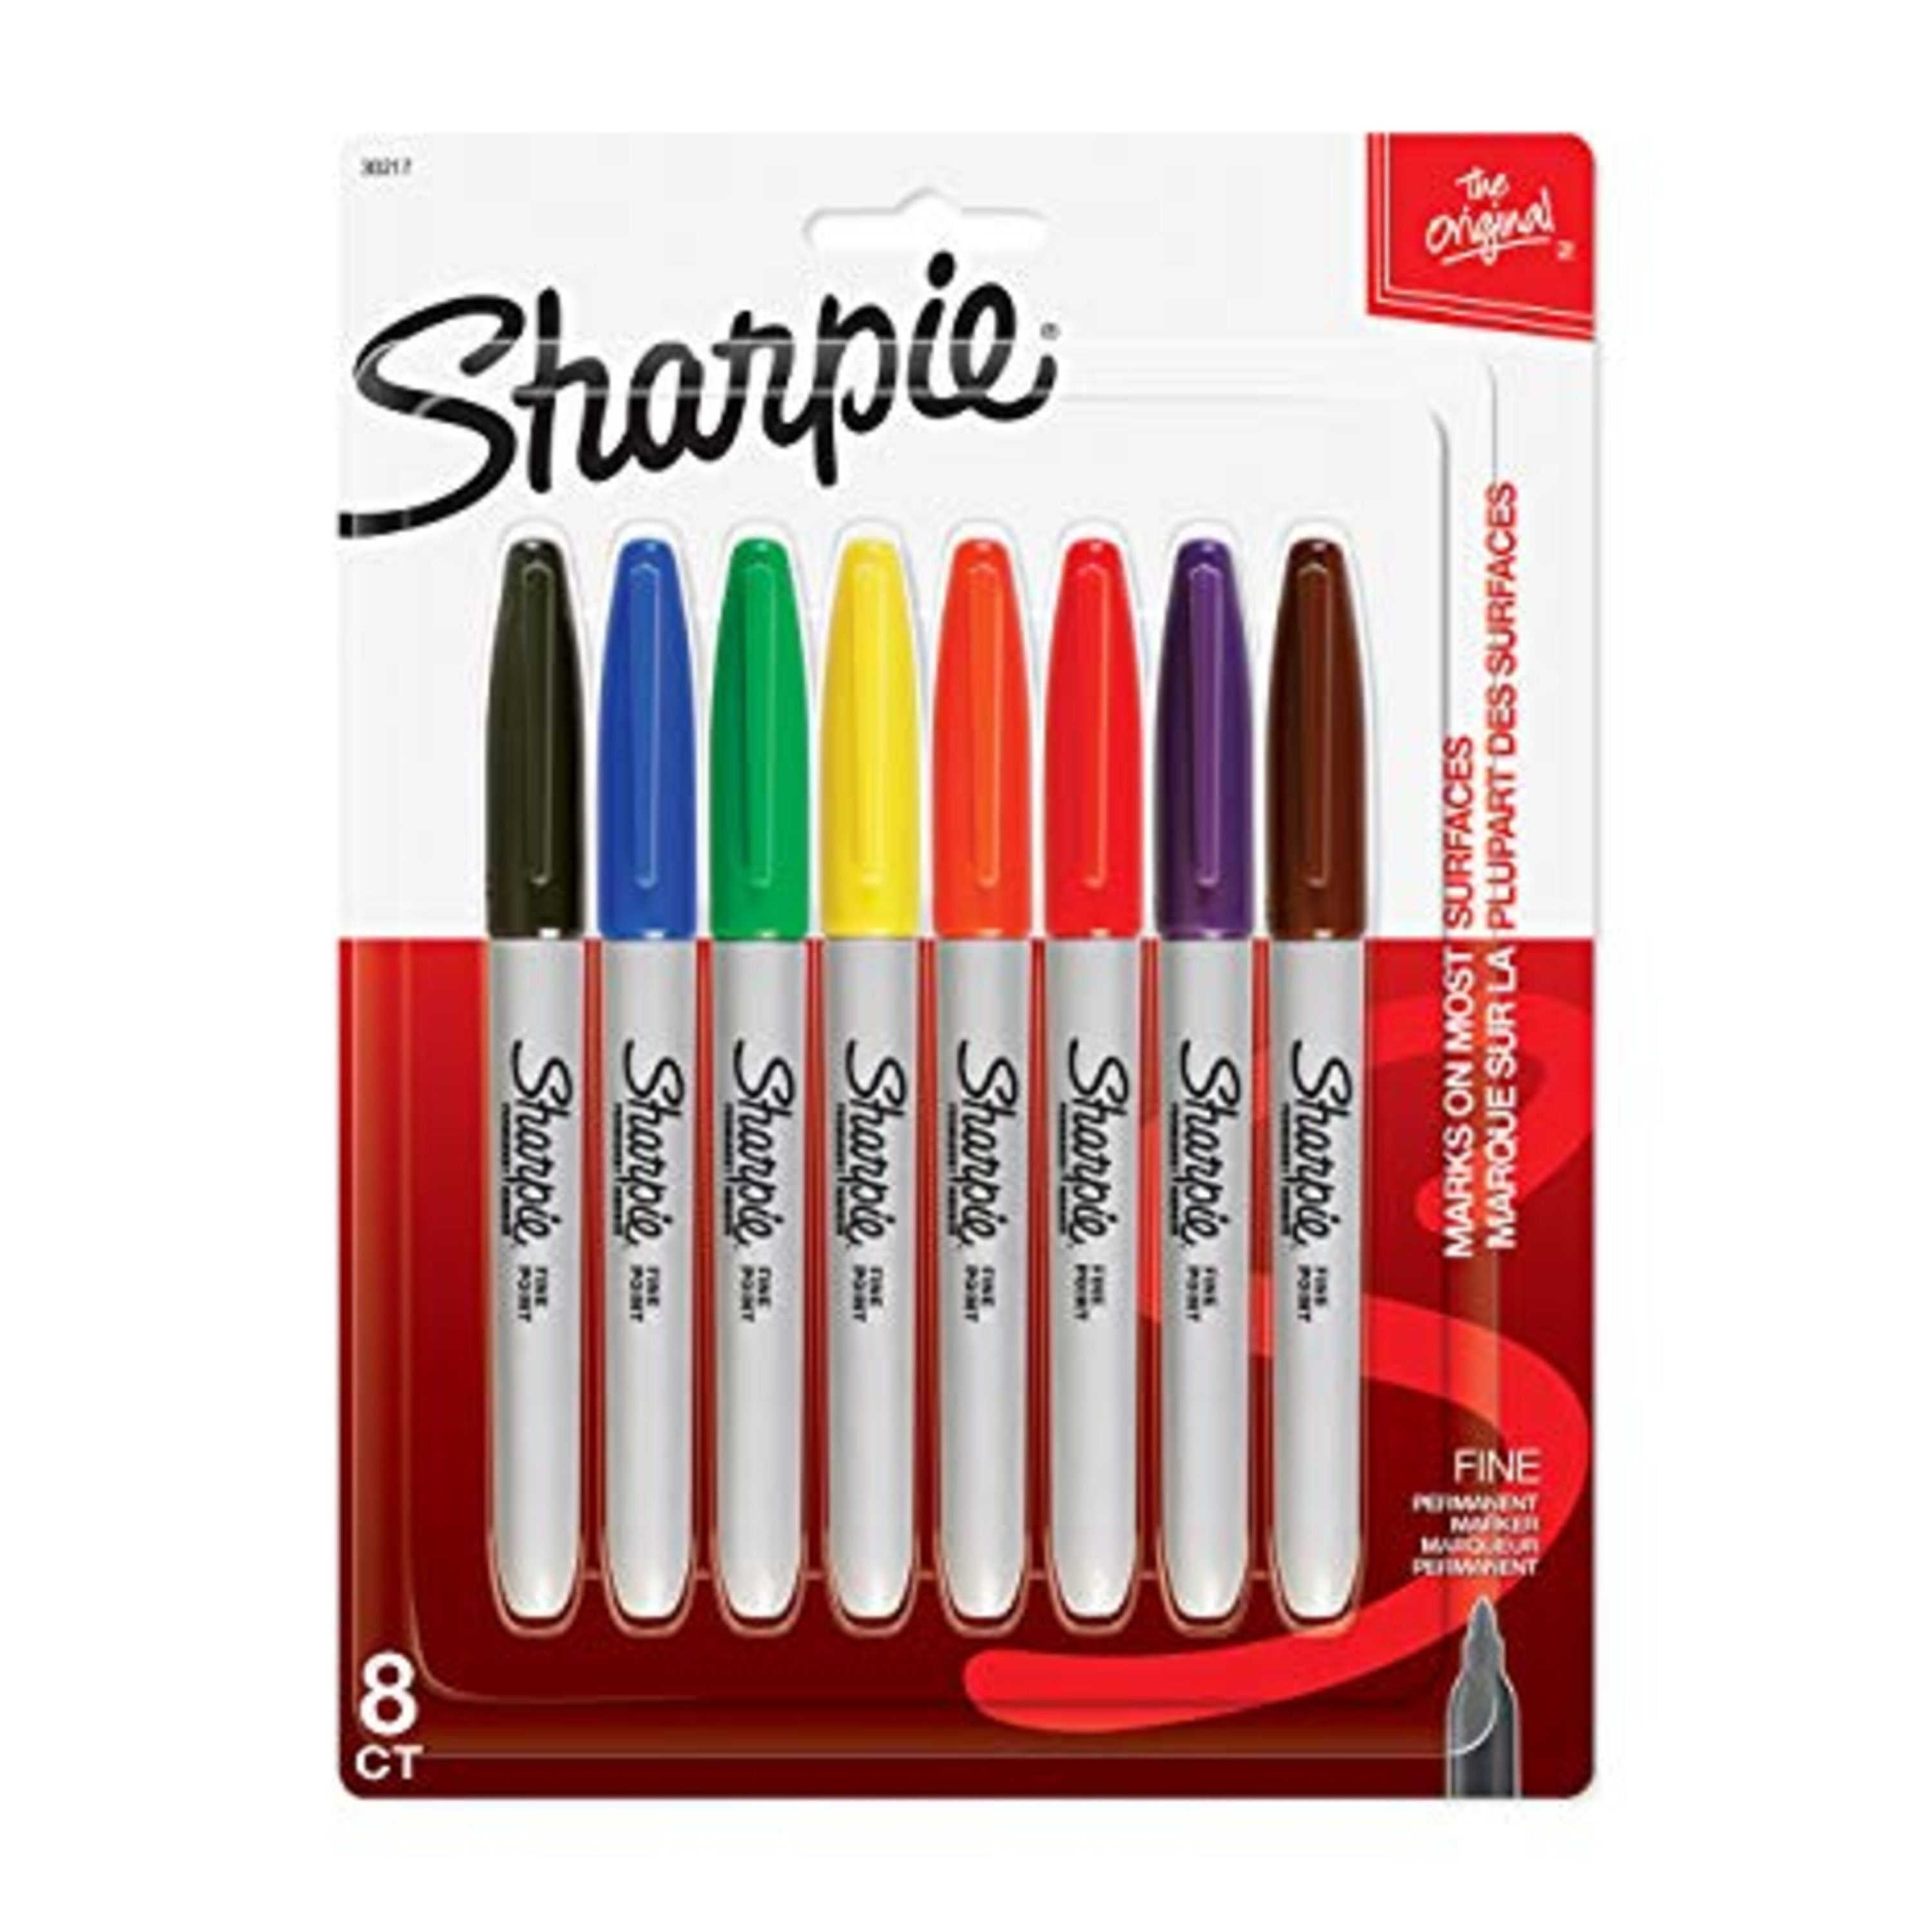 sharpie permanent marker pens Brand New X12 